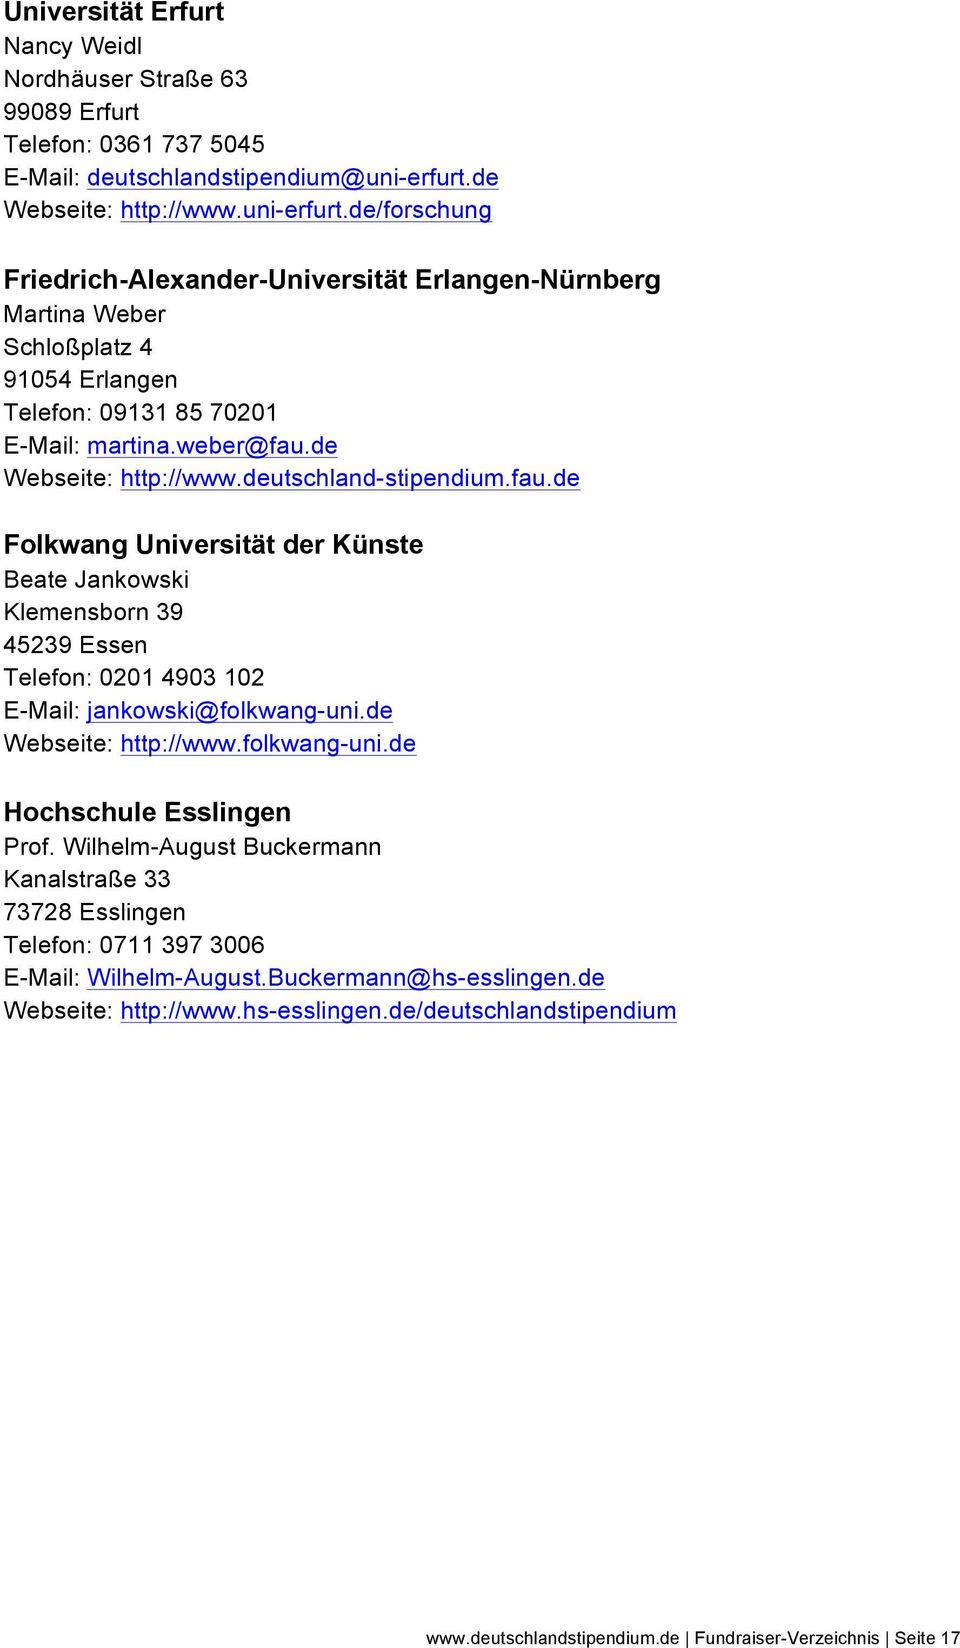 de Webseite: http://www.deutschland-stipendium.fau.de Folkwang Universität der Künste Beate Jankowski Klemensborn 39 45239 Essen Telefon: 0201 4903 102 E-Mail: jankowski@folkwang-uni.